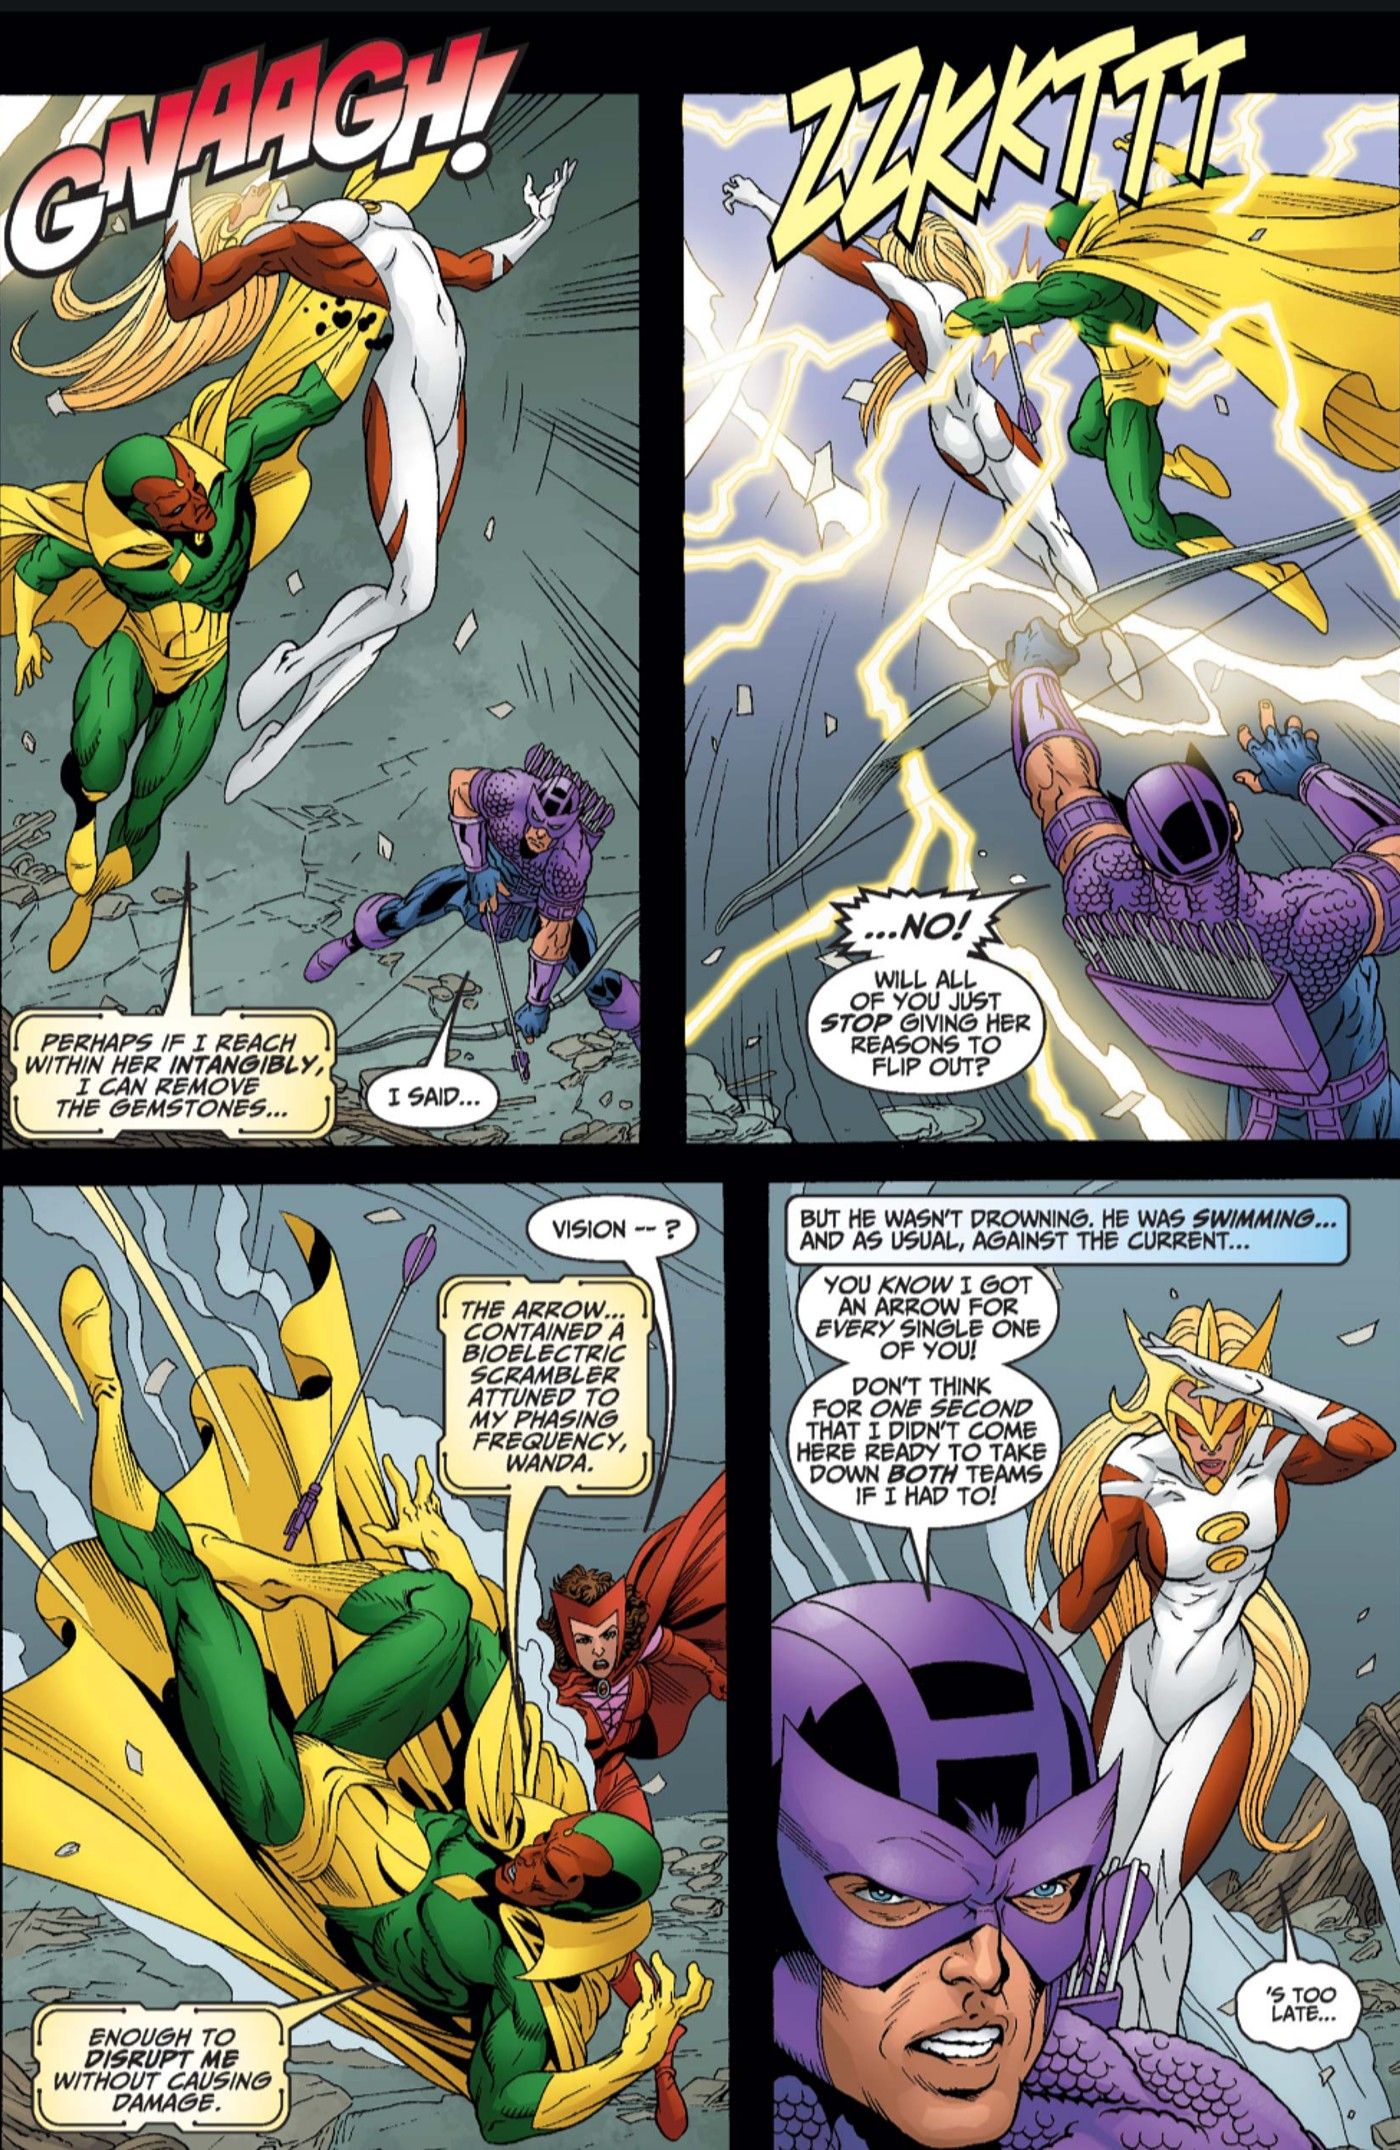 Hawkeye in Avengers/Thunderbolts #6 